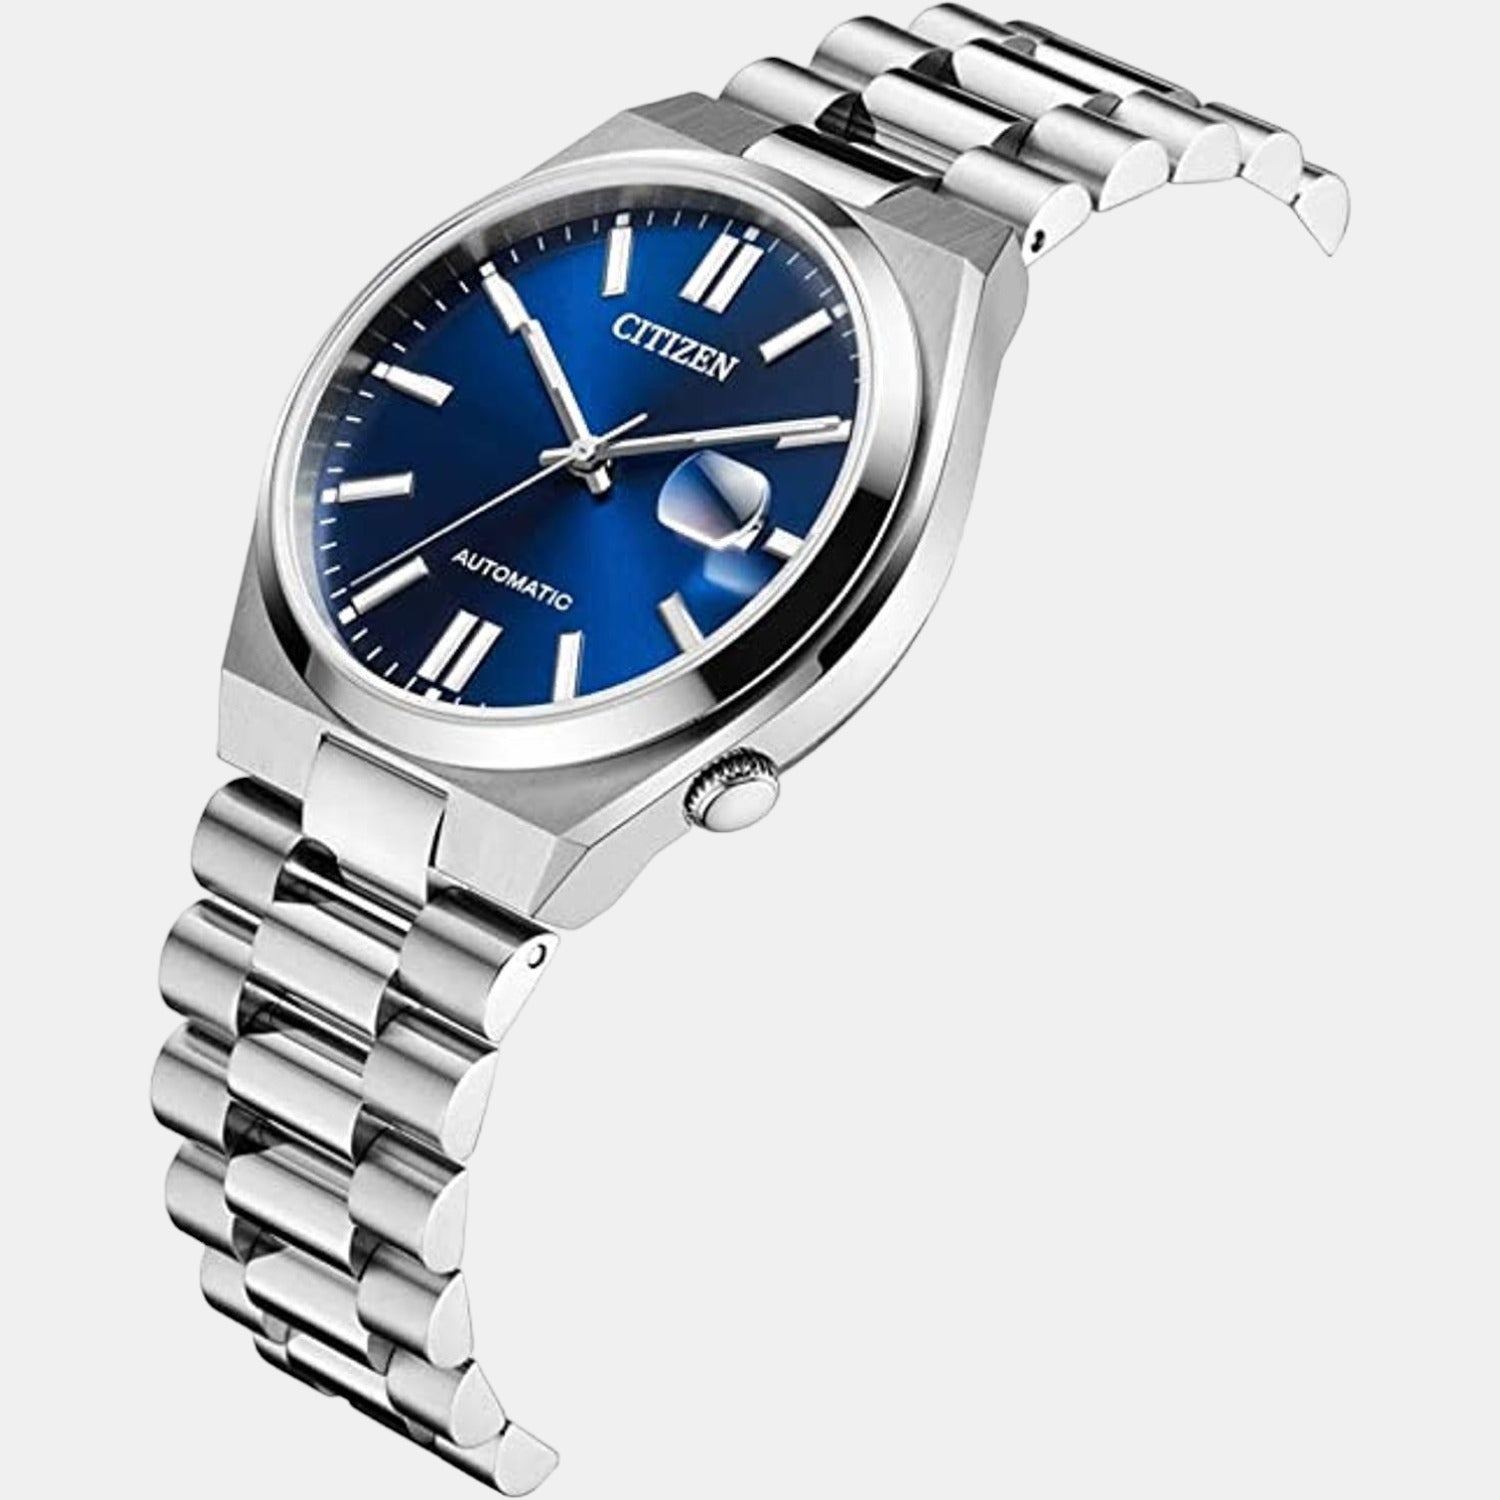 citizen-stainless-steel-blue-analog-men-watch-nj0150-81l